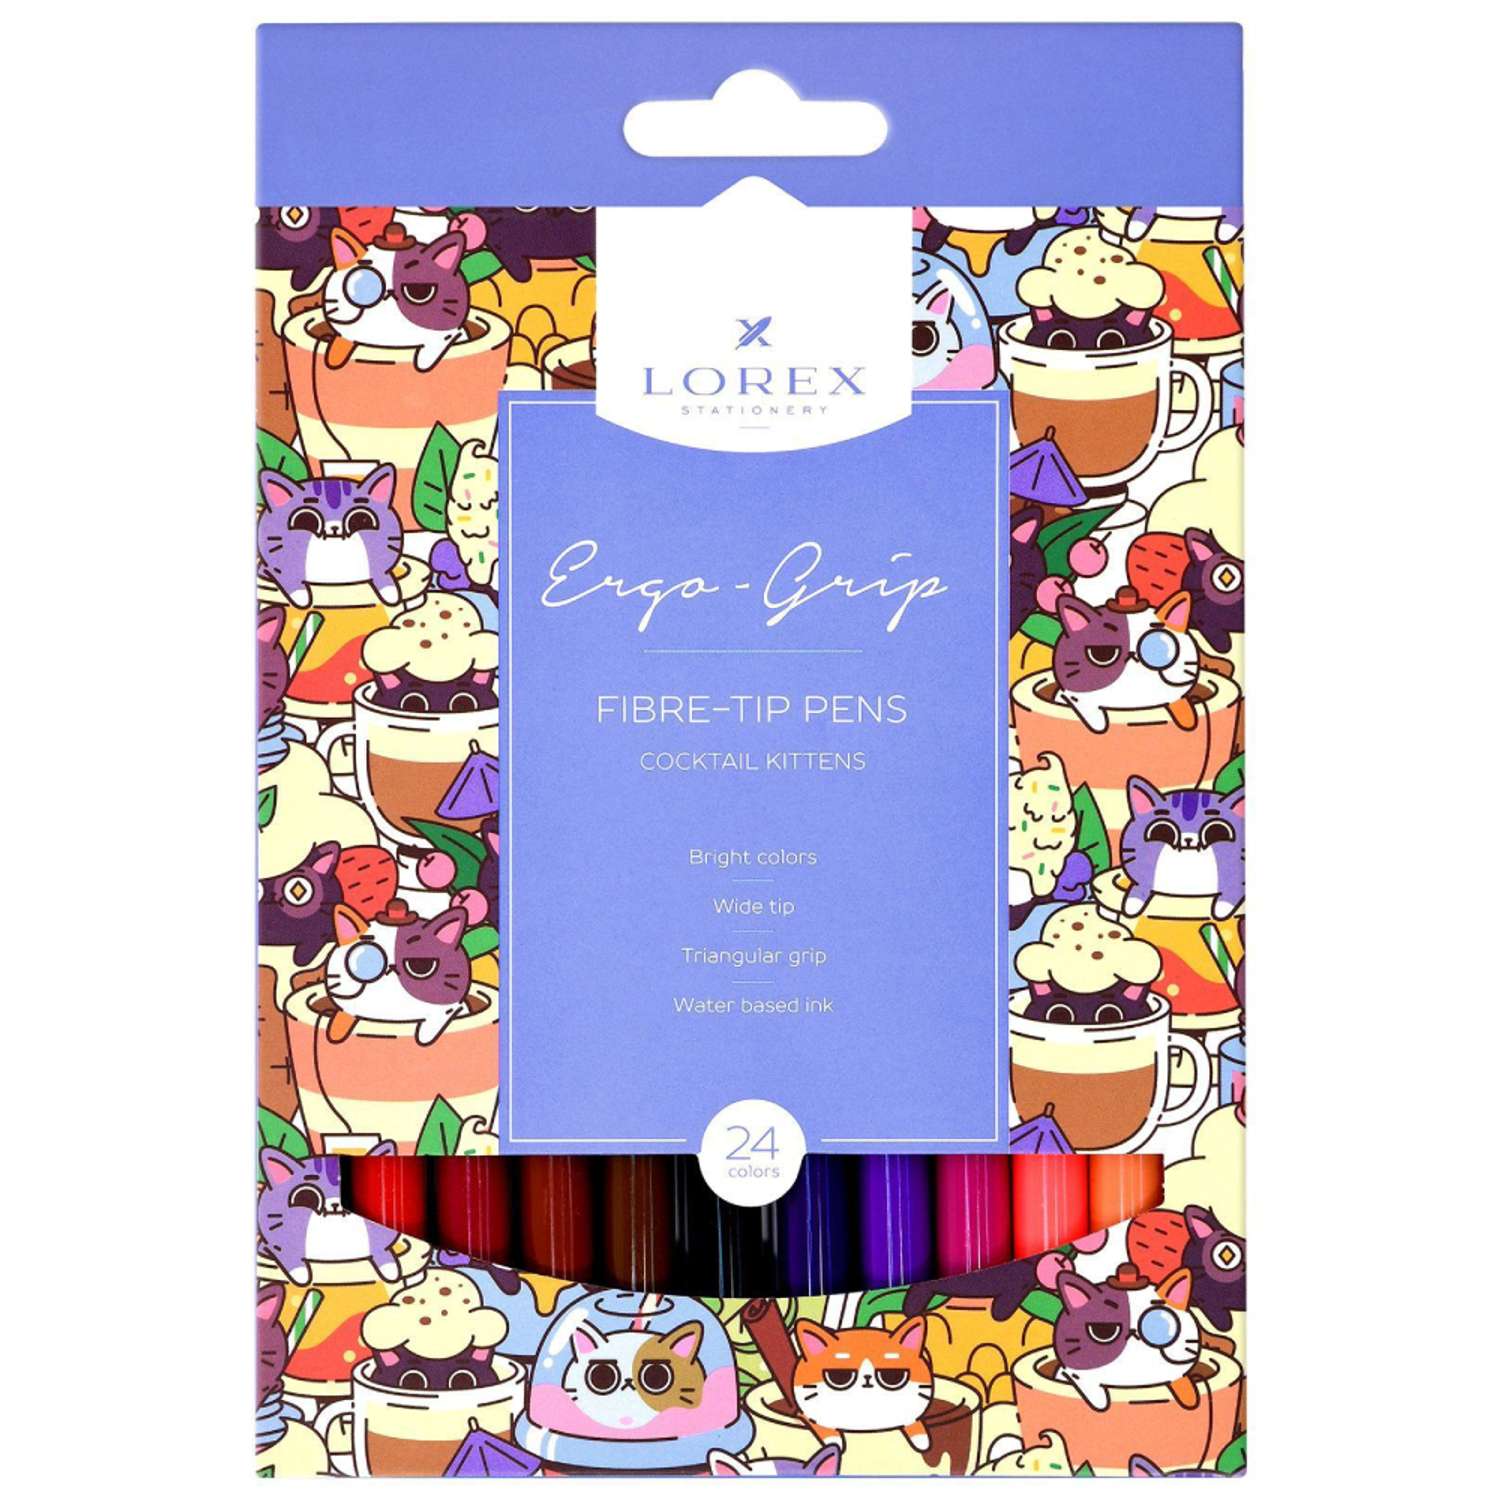 Фломастеры Lorex Stationery для рисования Cocktail kittens 24 цвета трехгранные - фото 1